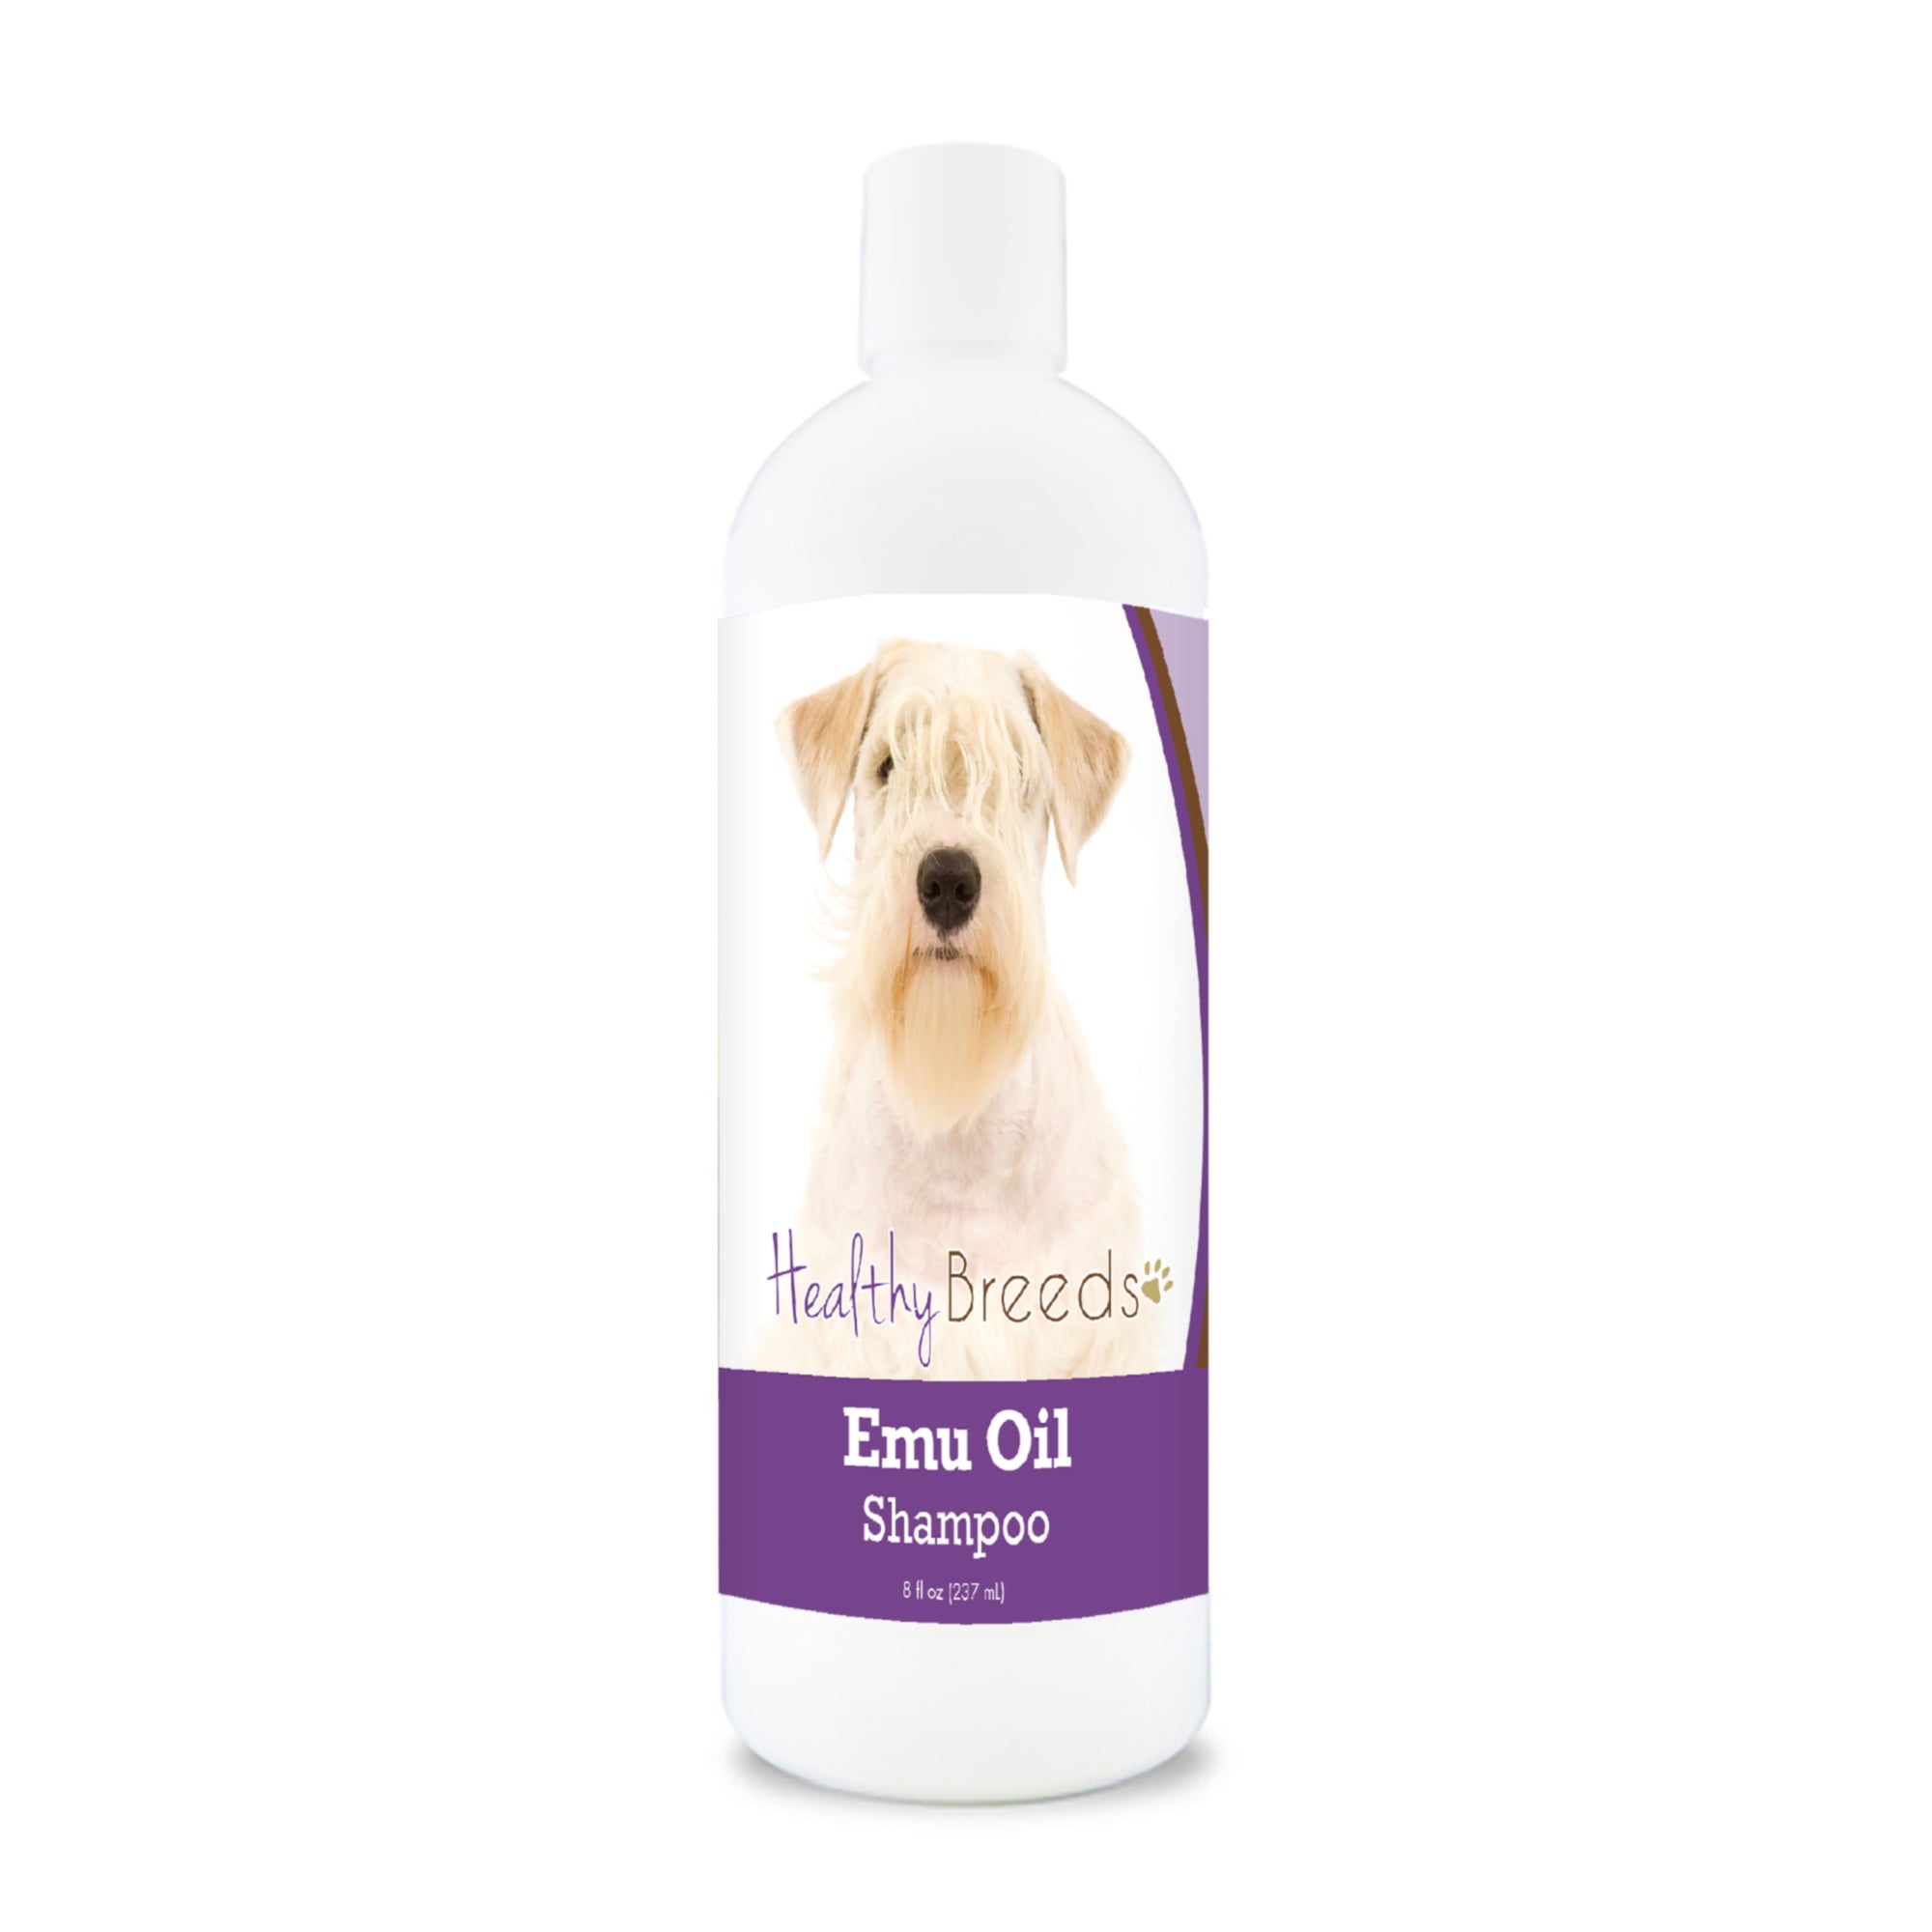 Sealyham Terrier Emu Oil Shampoo 8 oz